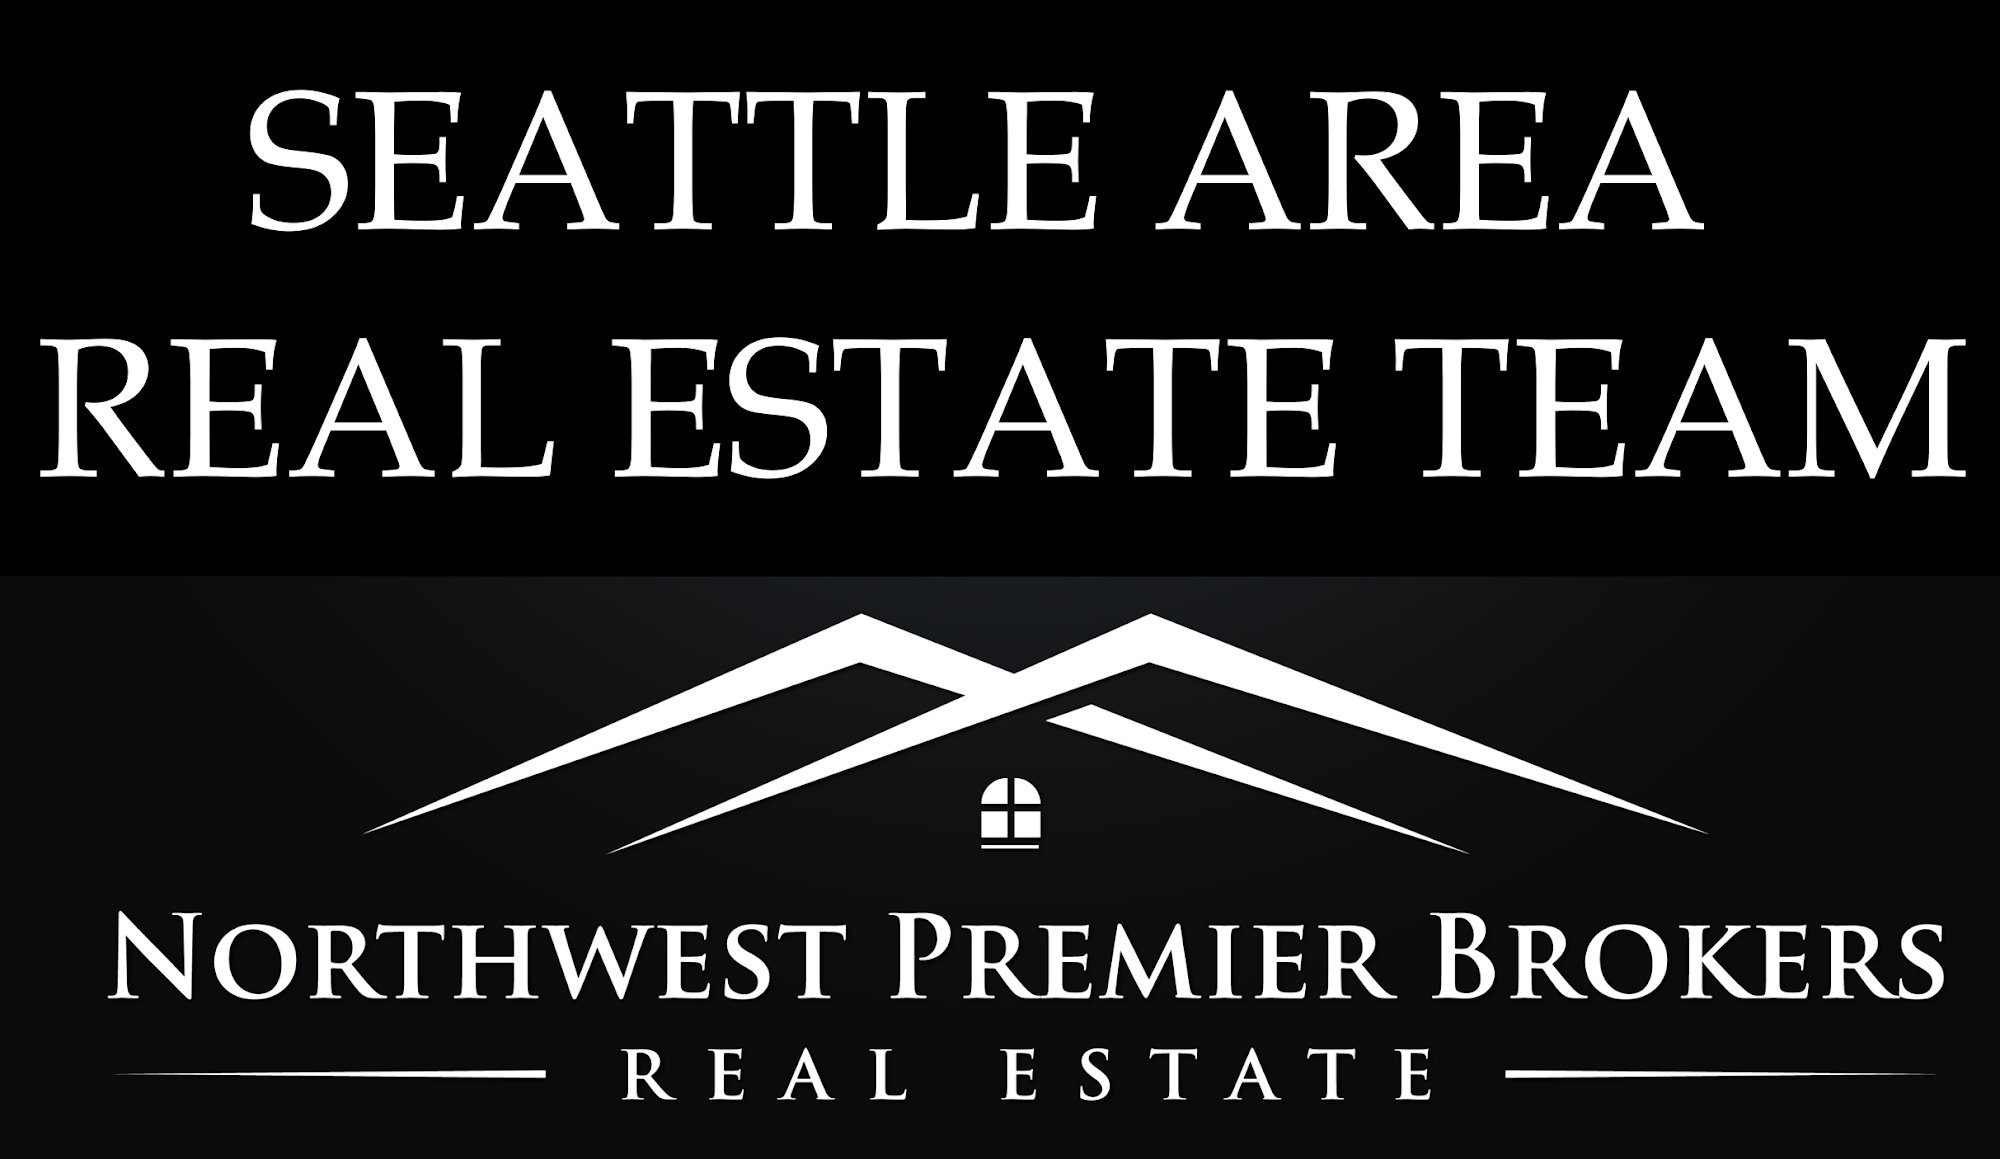 Seattle Area Real Estate Team at Northwest Premier Brokers